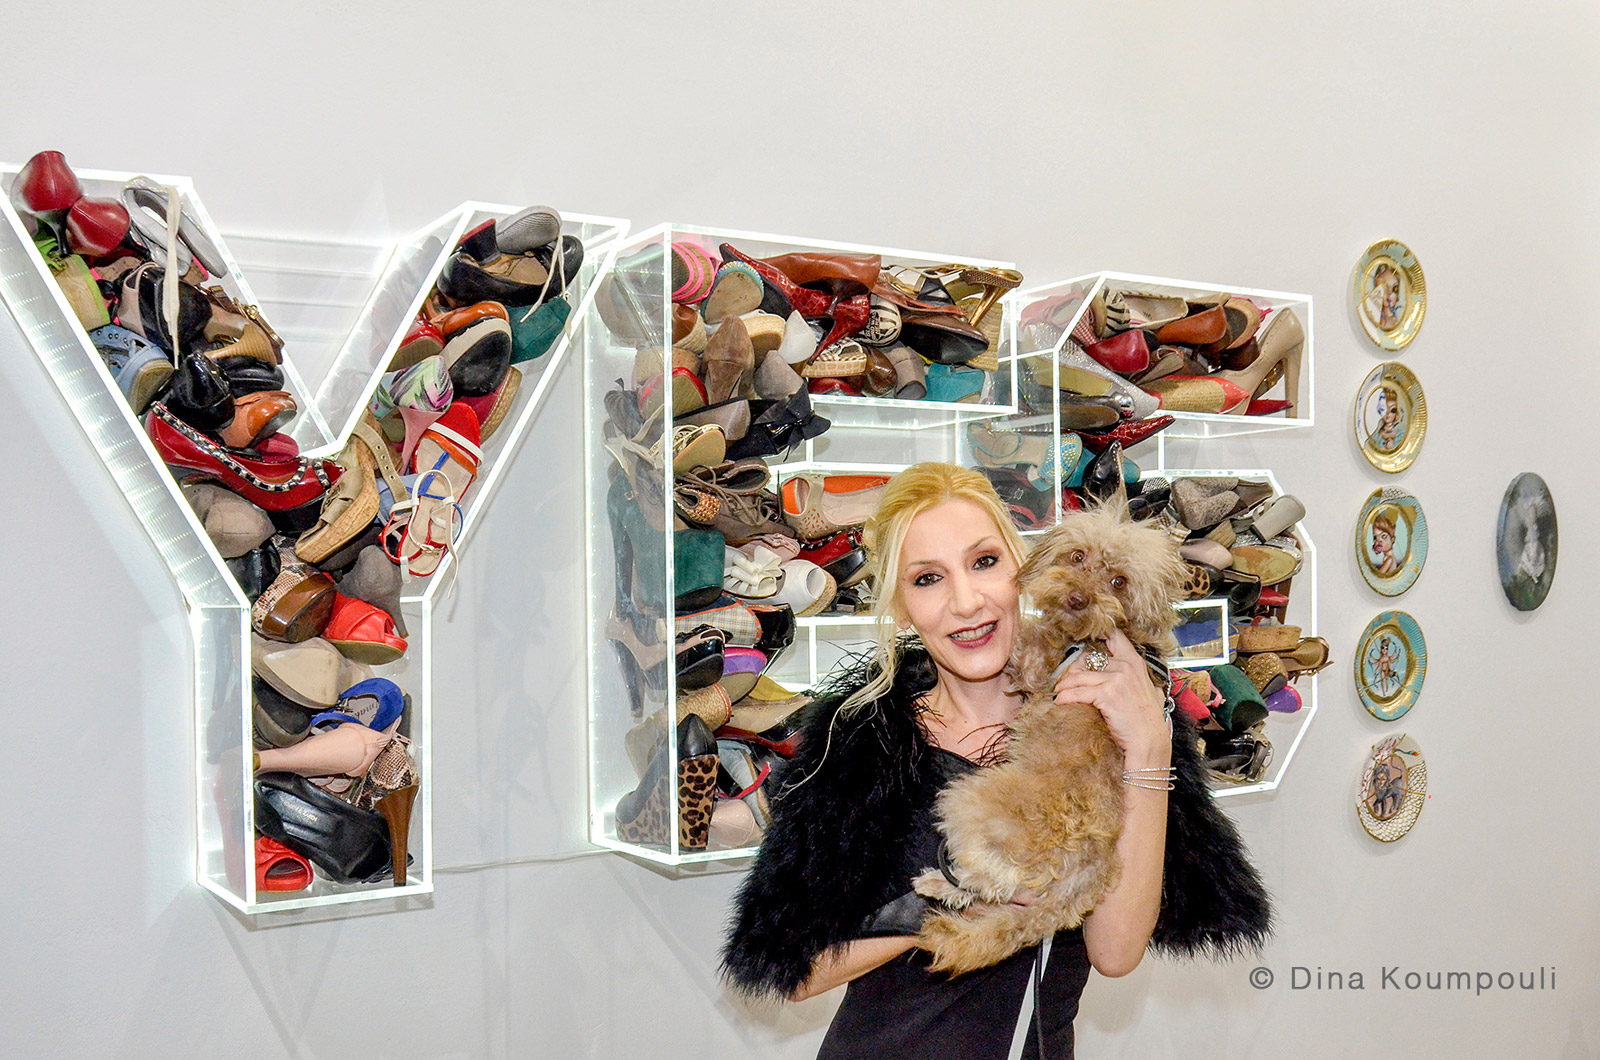 Alexandra Kollaros and her dog Kaya in front of Nar's plexiglass artwork "yes"